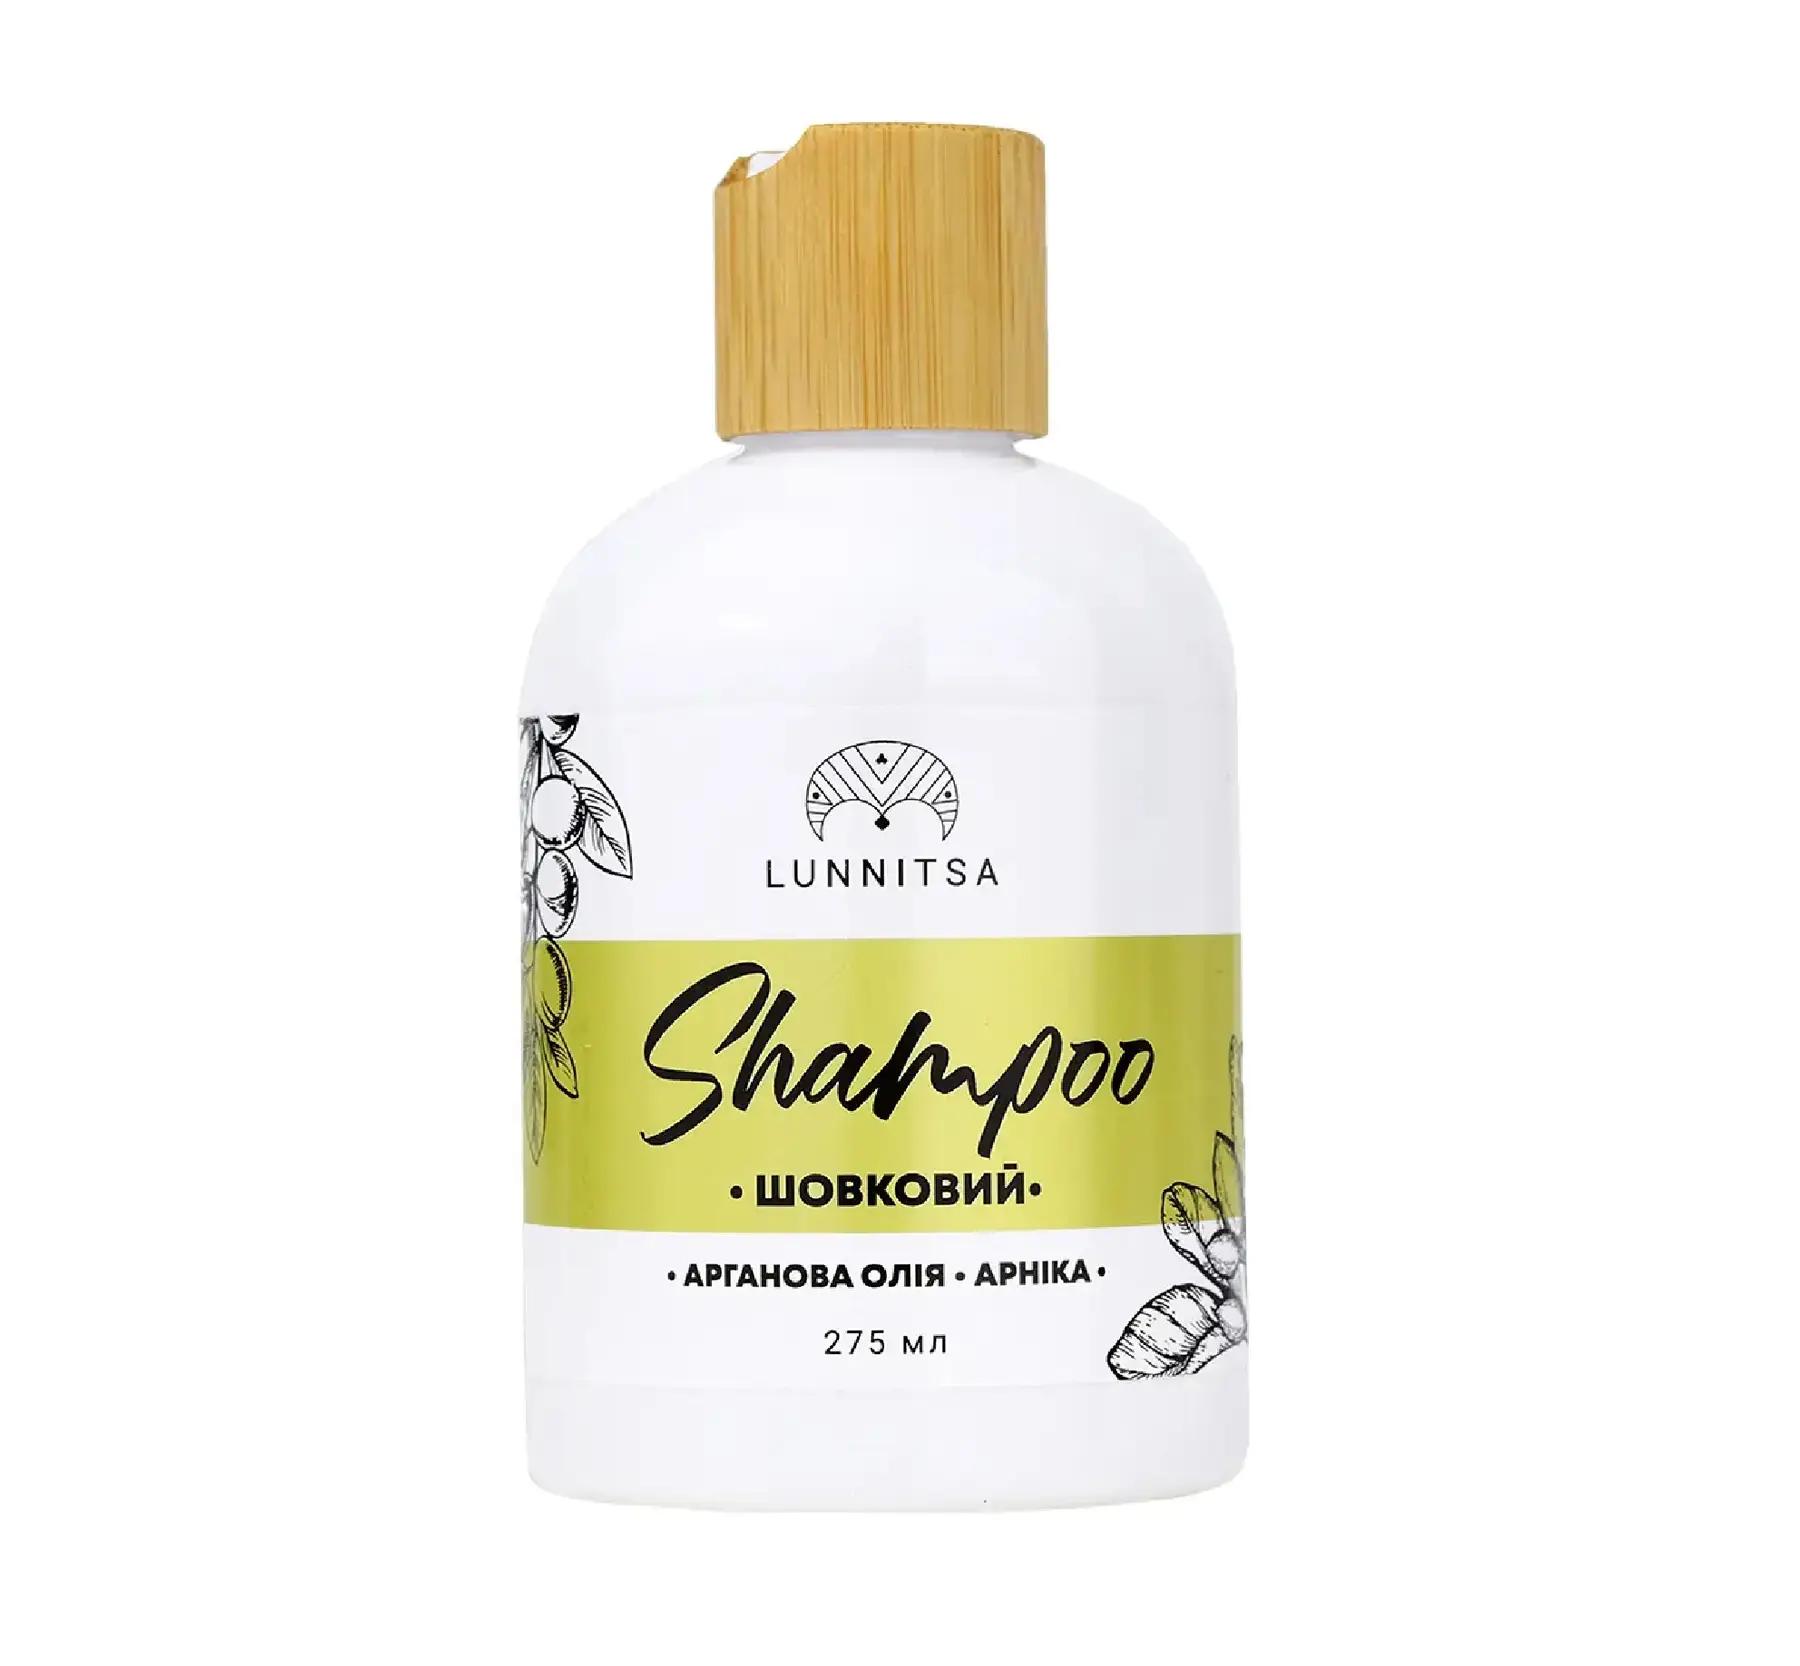 Lunnitsa Shampoo Silk for dry and damaged hair Lunnitsa 275 ml